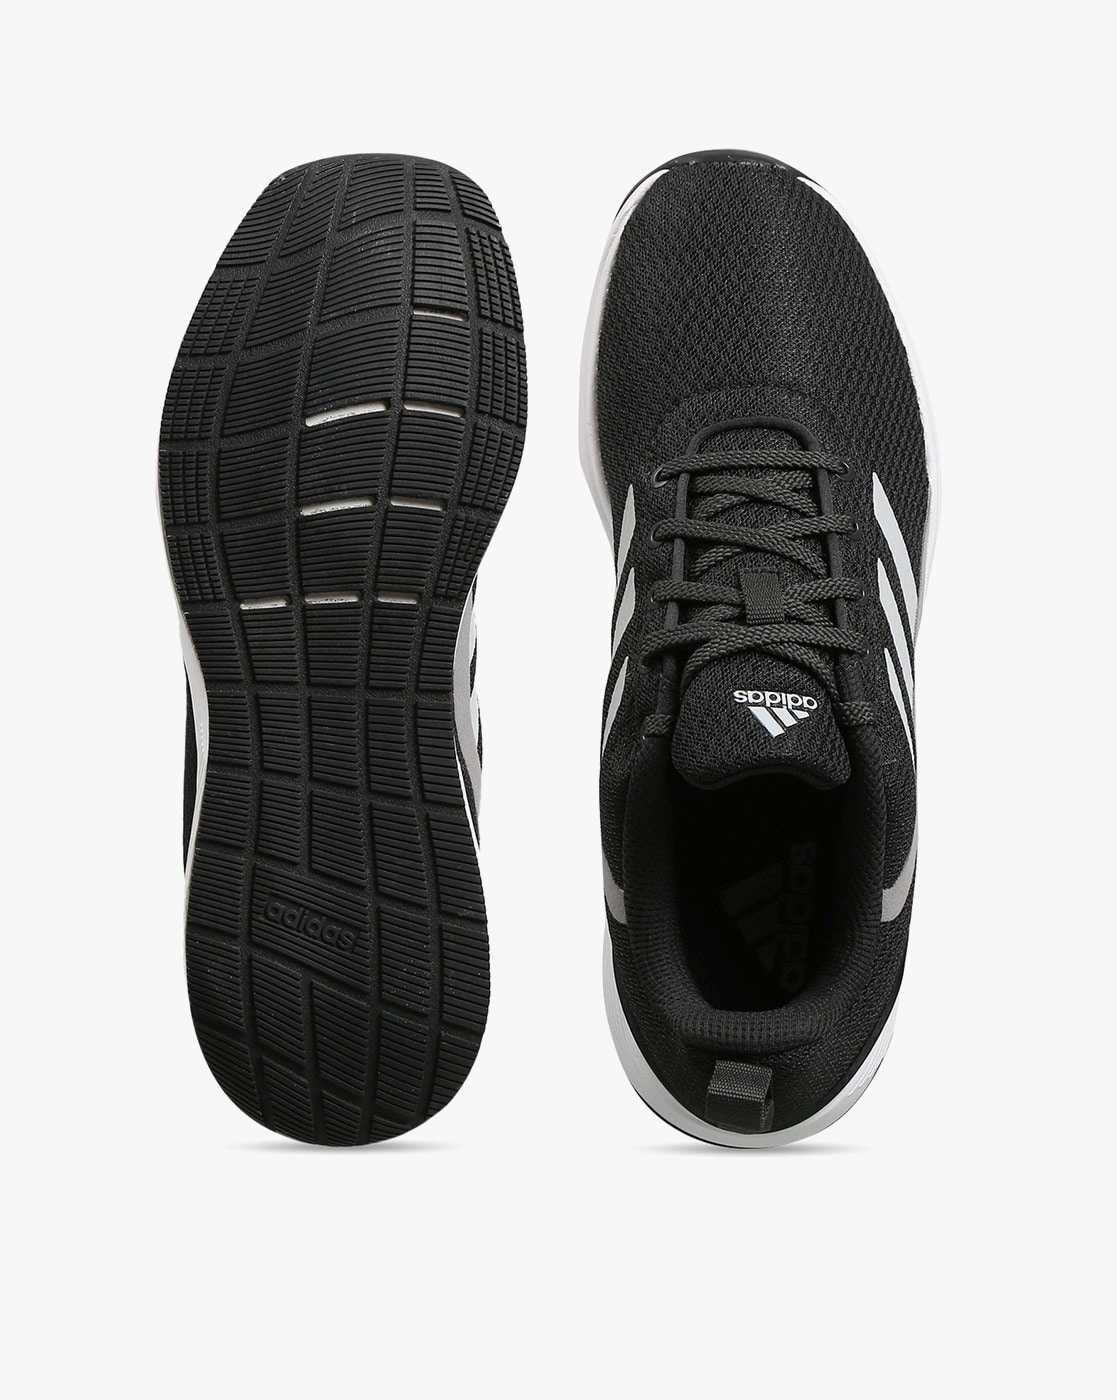 Buy Adidas Men Lyris M Legear/Cblack/Silvmt Running Shoes-11 UK/India (46  EU) (CL7278) at Amazon.in